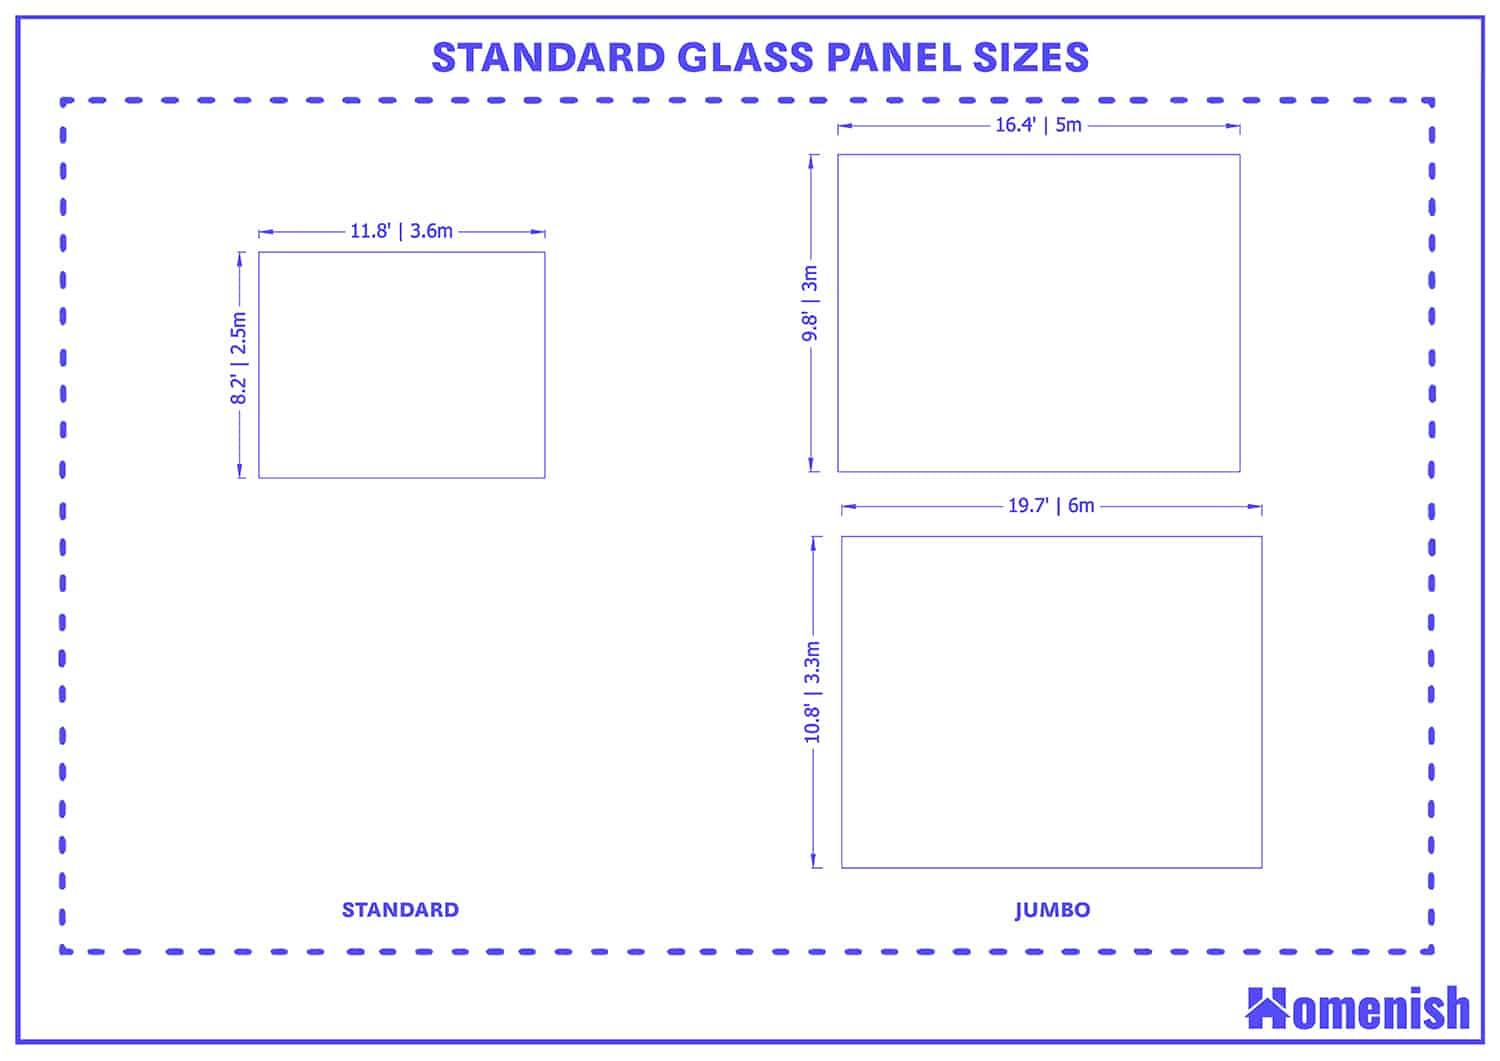 Standard glass panel sizes